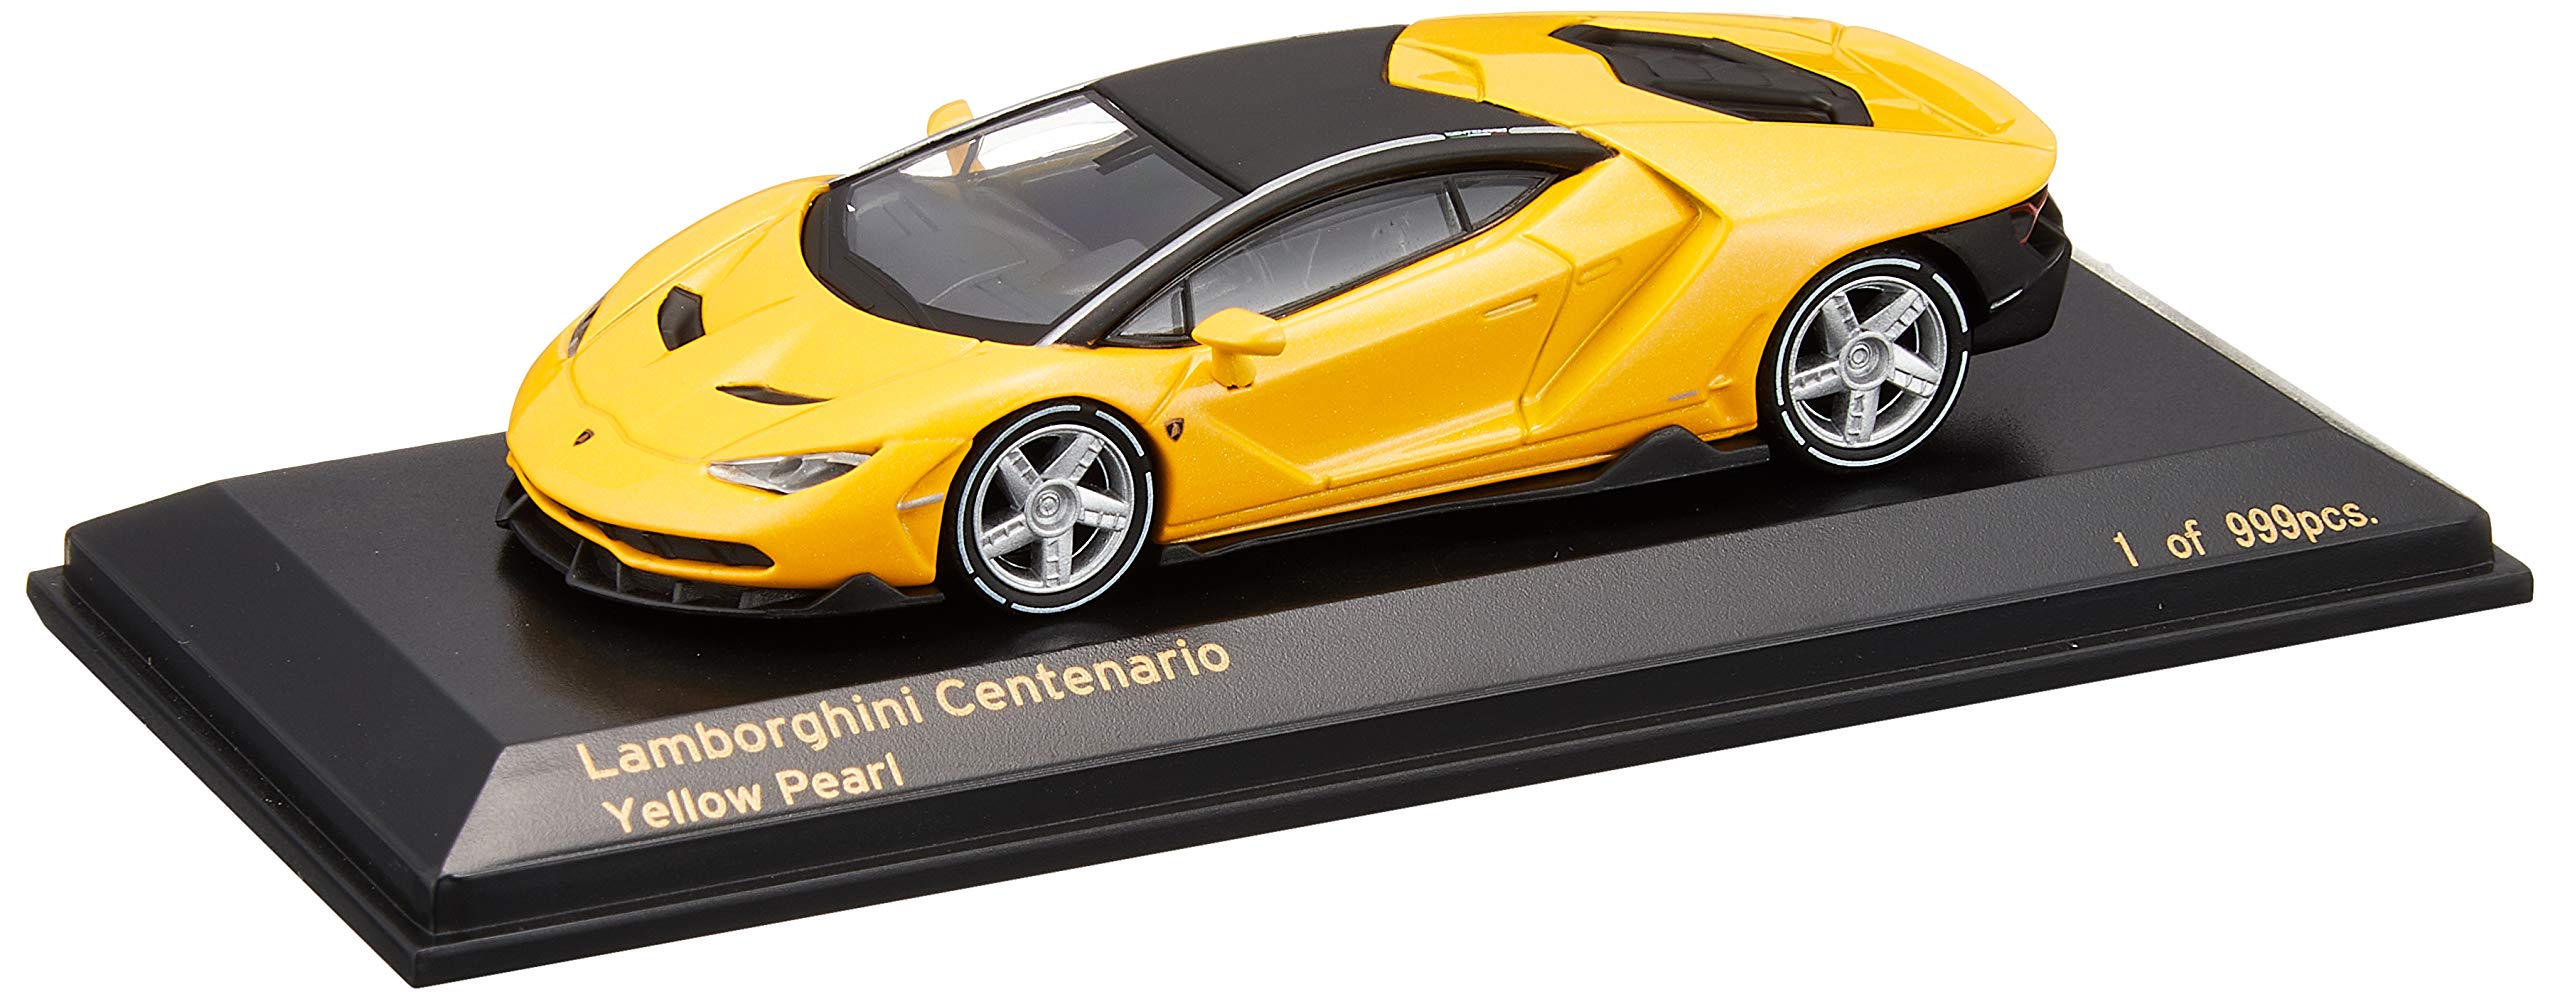 Mua CARNEL 1/64 Lamborghini Centenario Yellow Pearl Finished Product trên  Amazon Nhật chính hãng 2023 | Fado